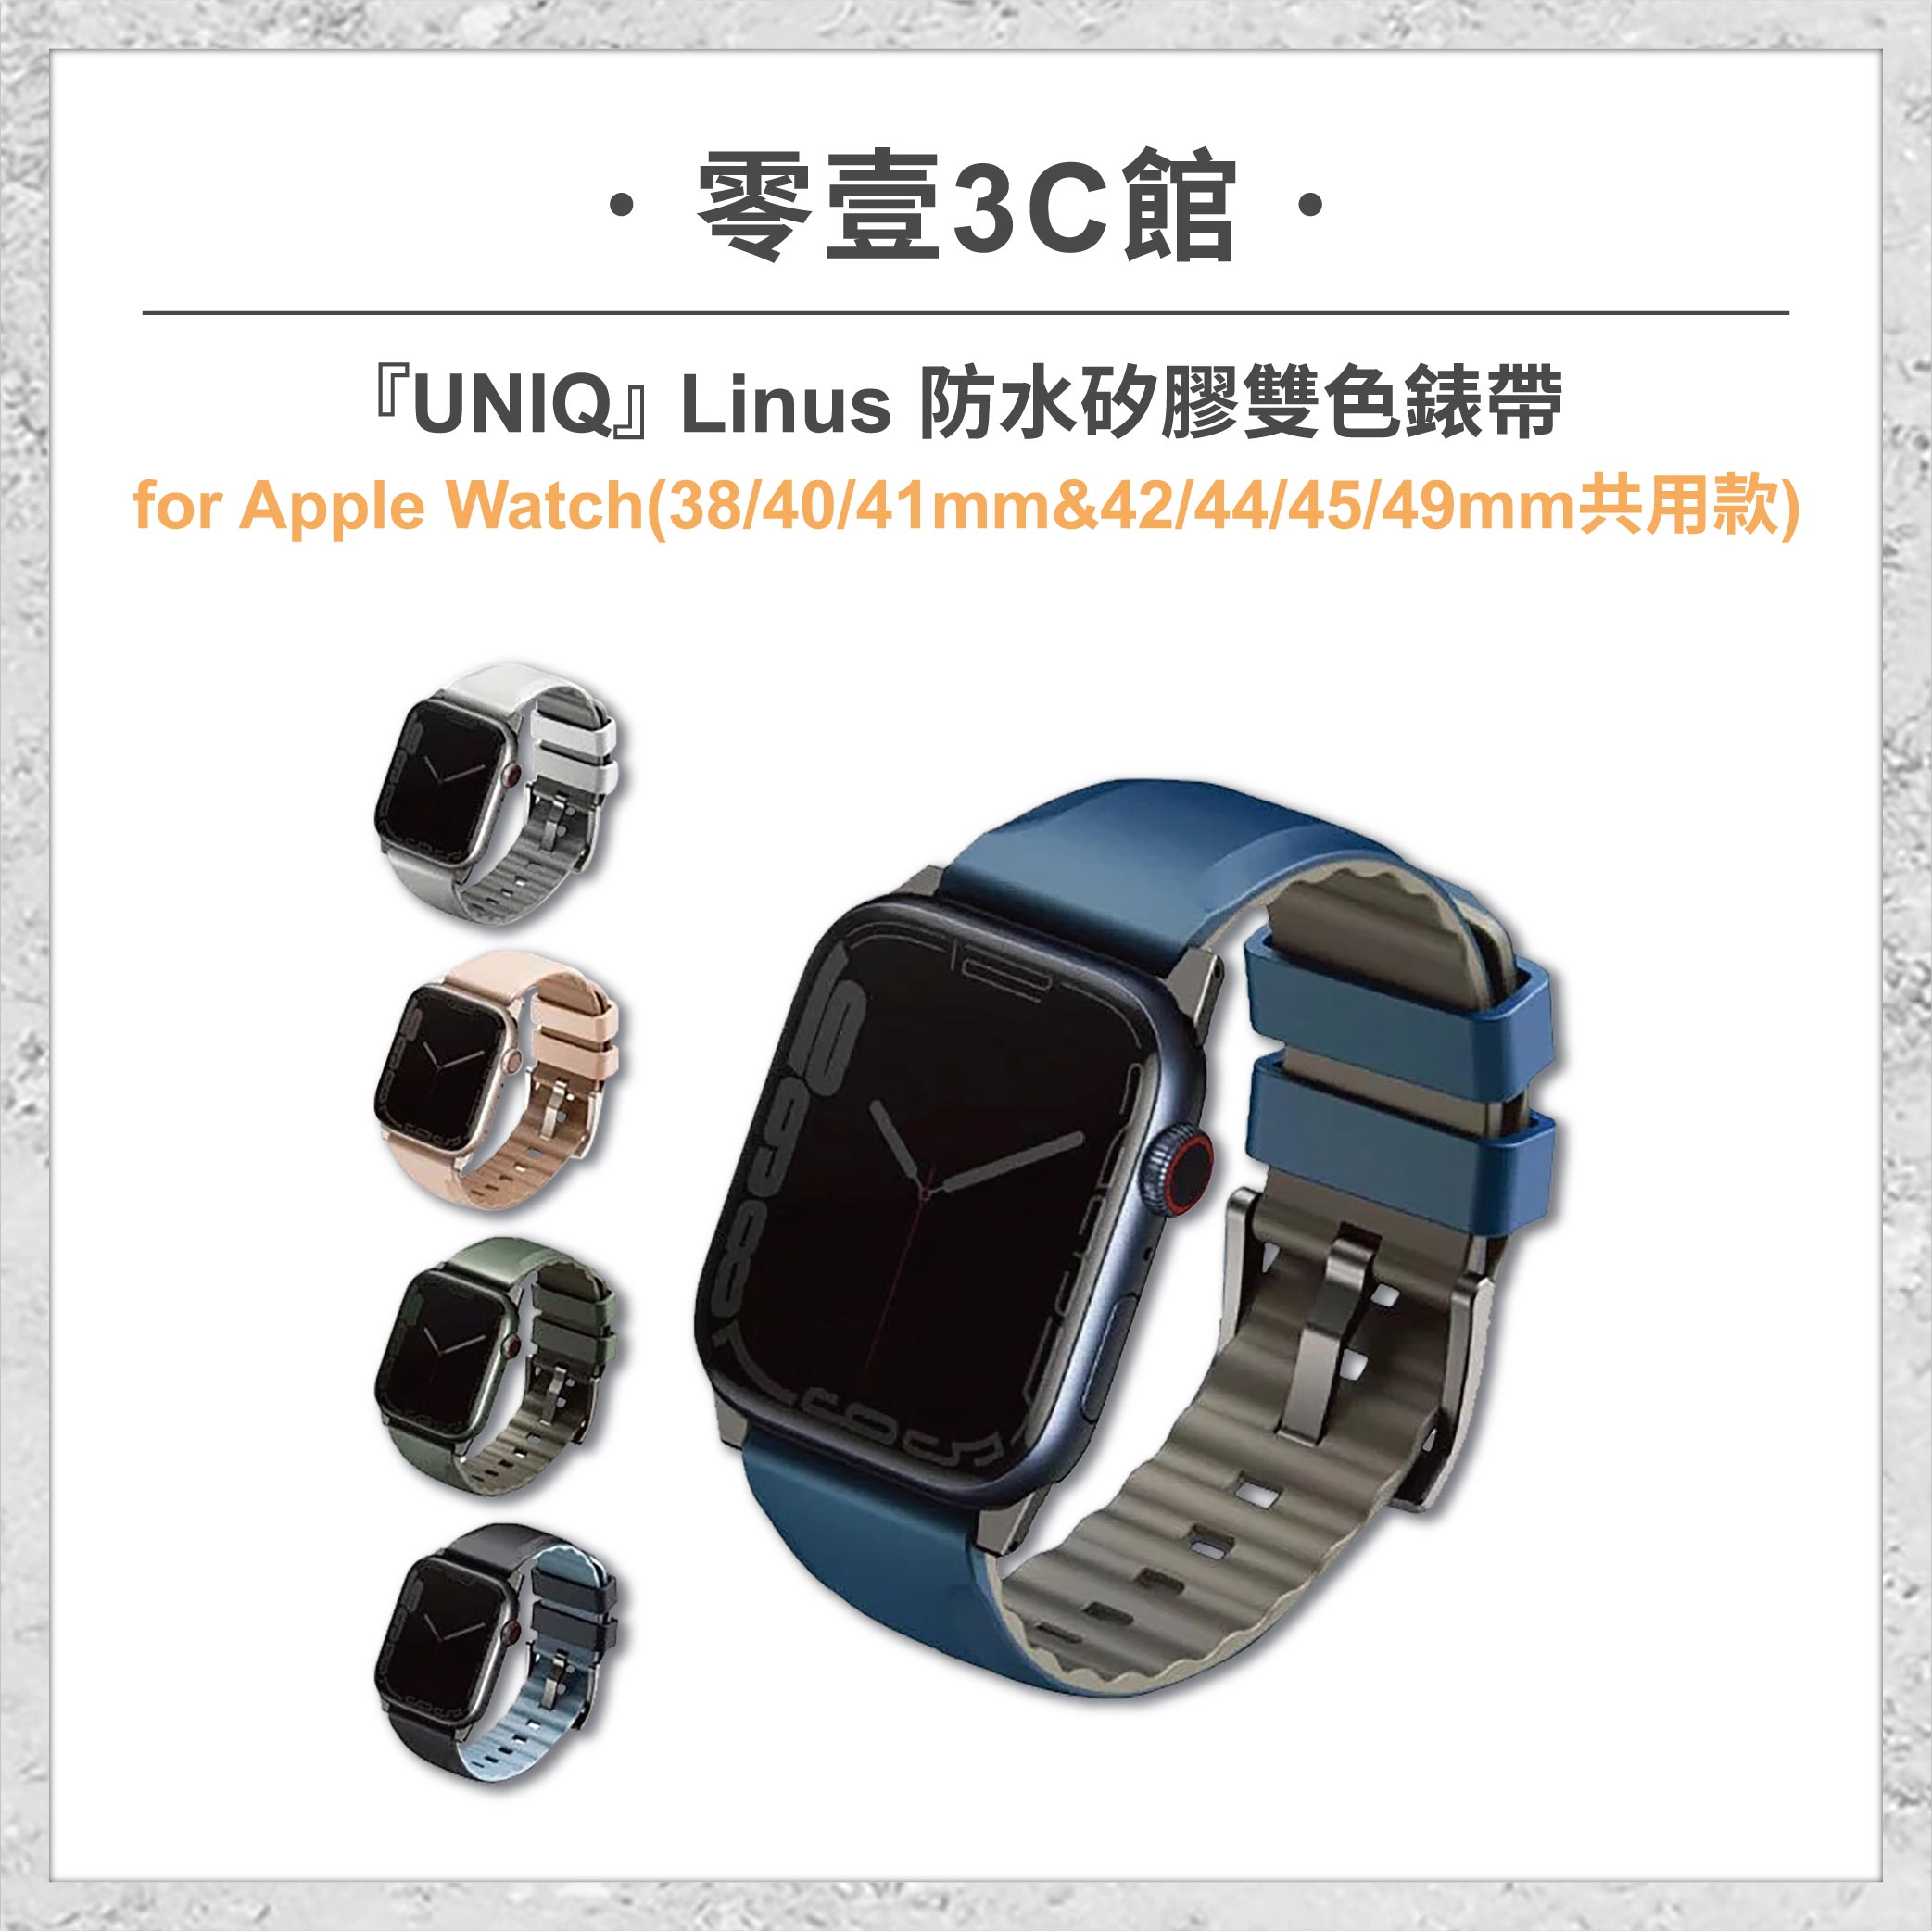 『UNIQ』Linus 防水矽膠雙色錶帶 for Apple Watch 38/40/41&42/44/45/49共用款